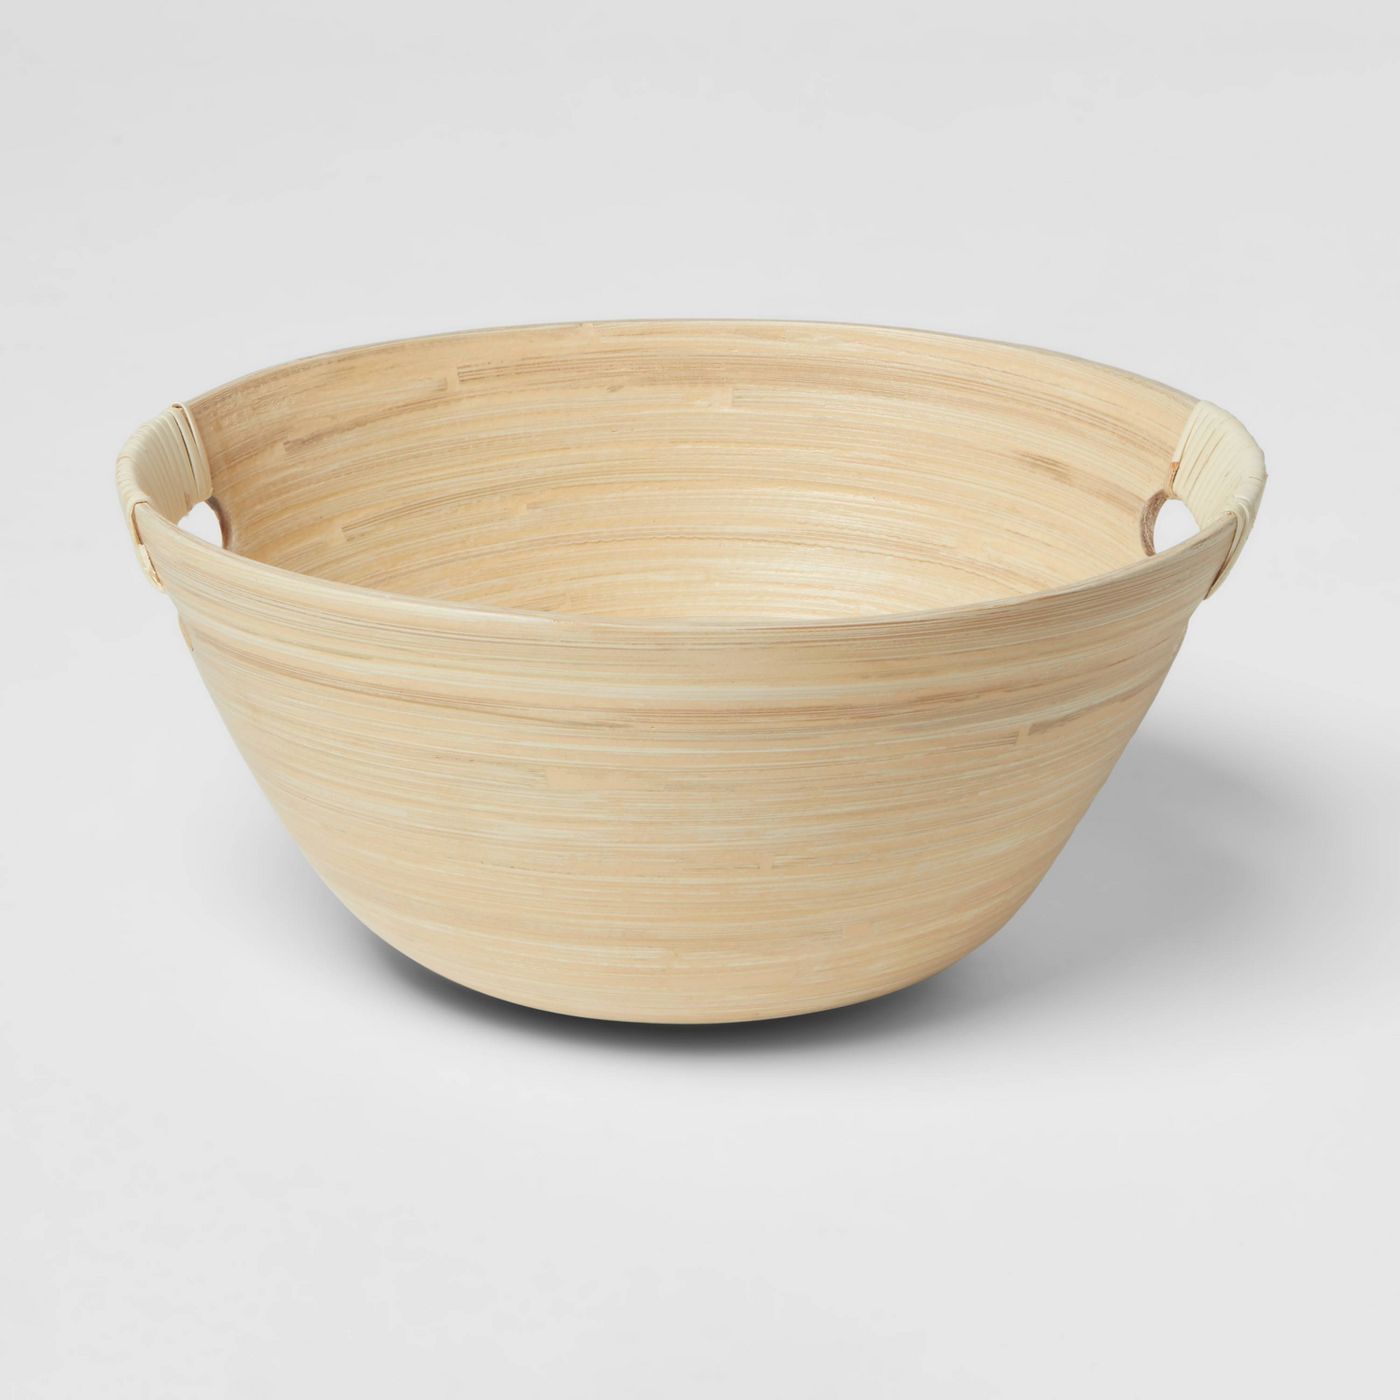 serving bowl made of spun bamboo